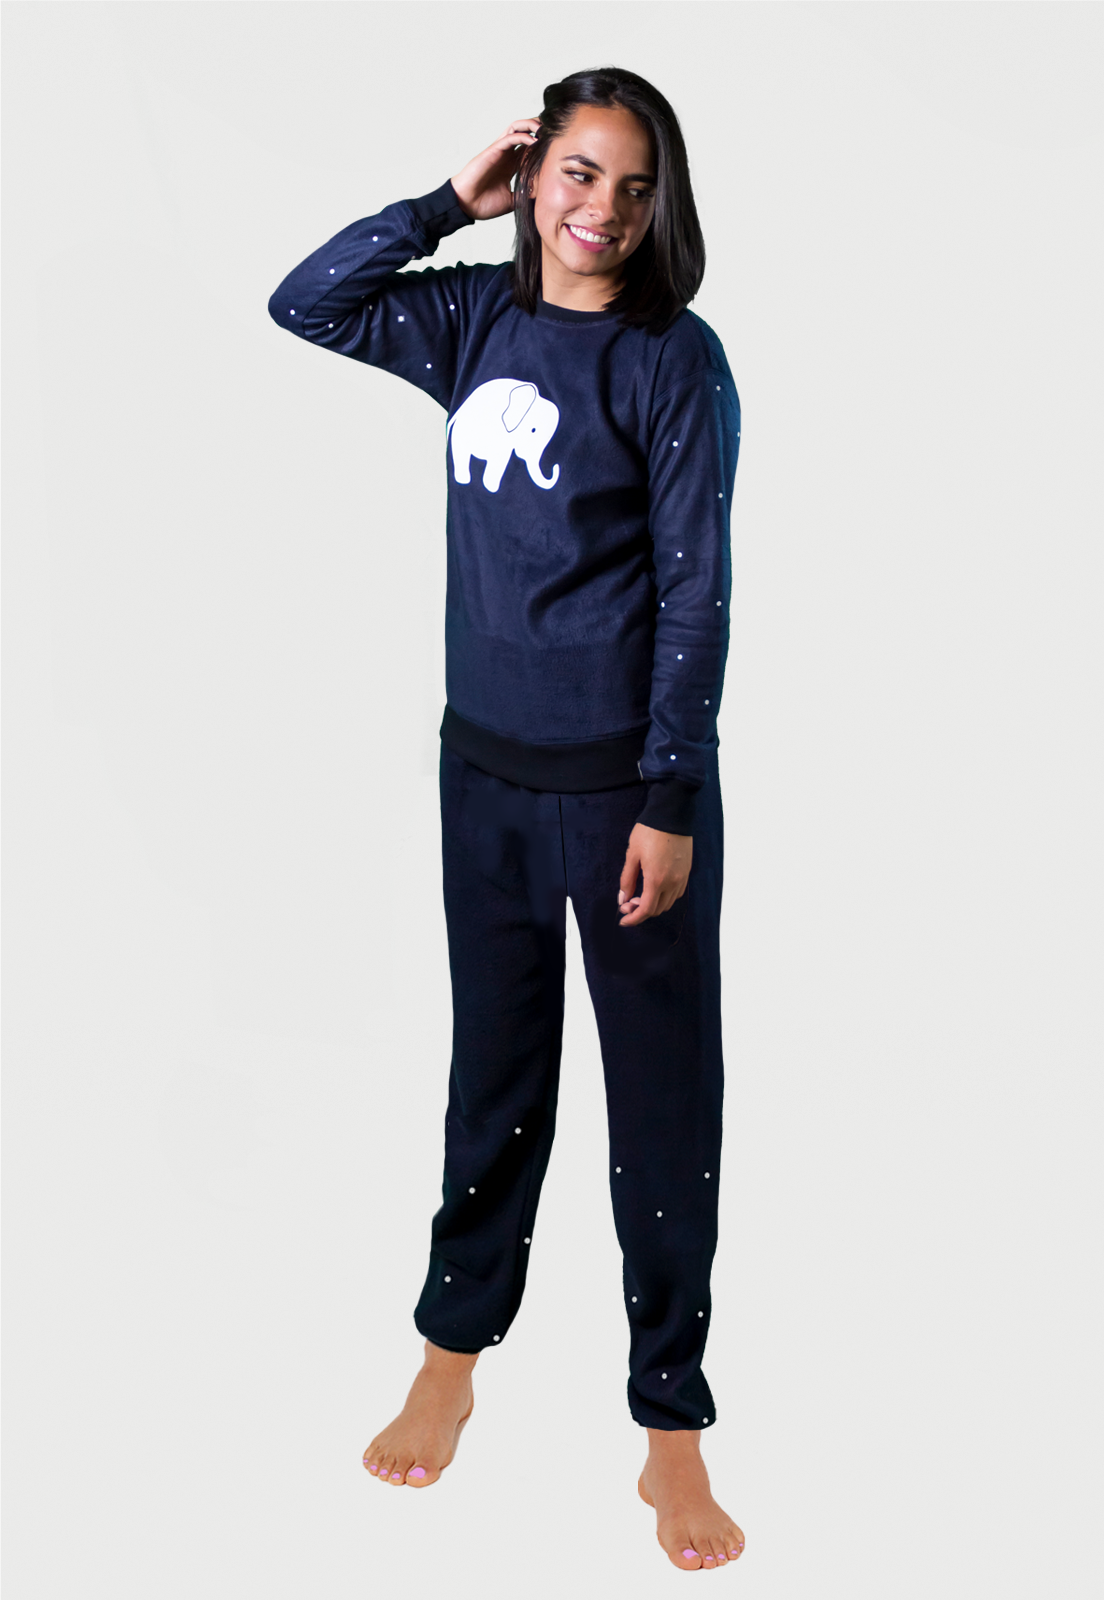 Pijama Térmica para Mujer Azul | Elefante | En Fleece